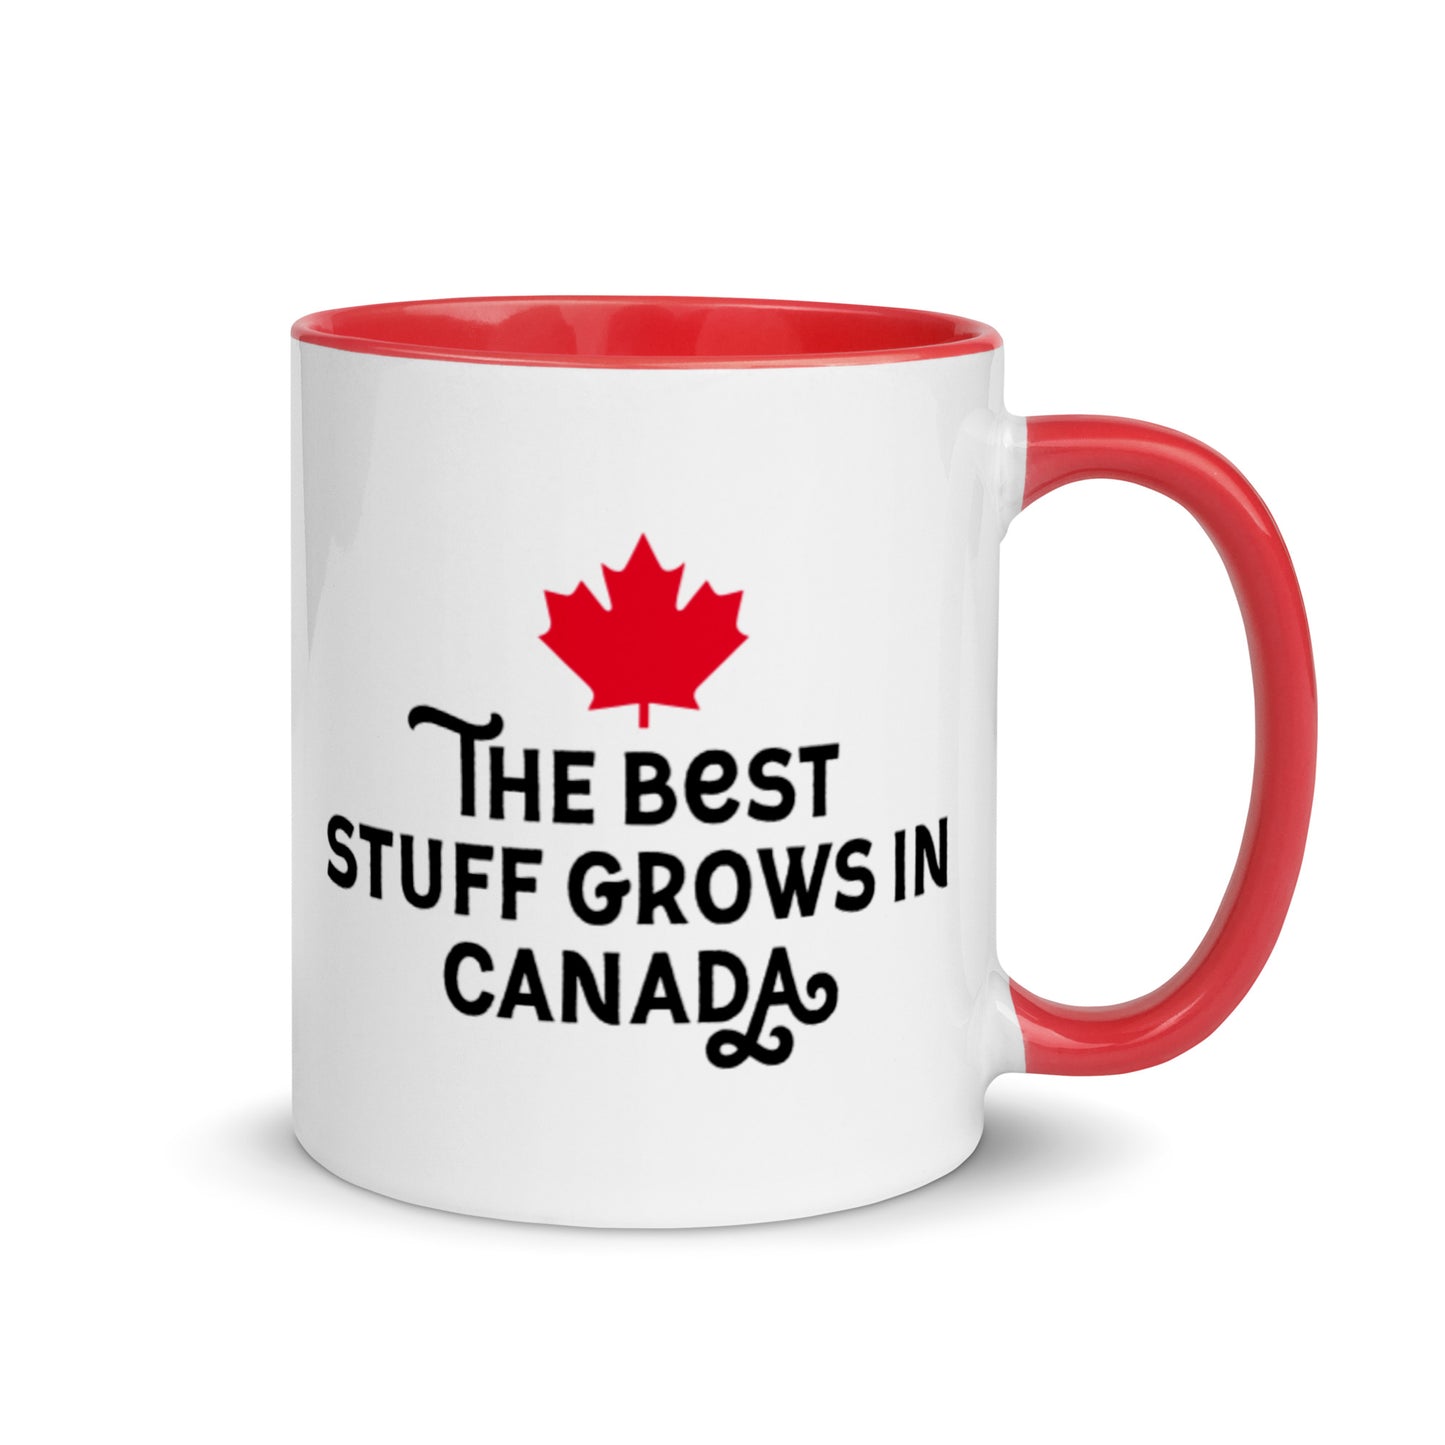 "The Best Stuff Grows in Canada" Ceramic Mug, 11 oz